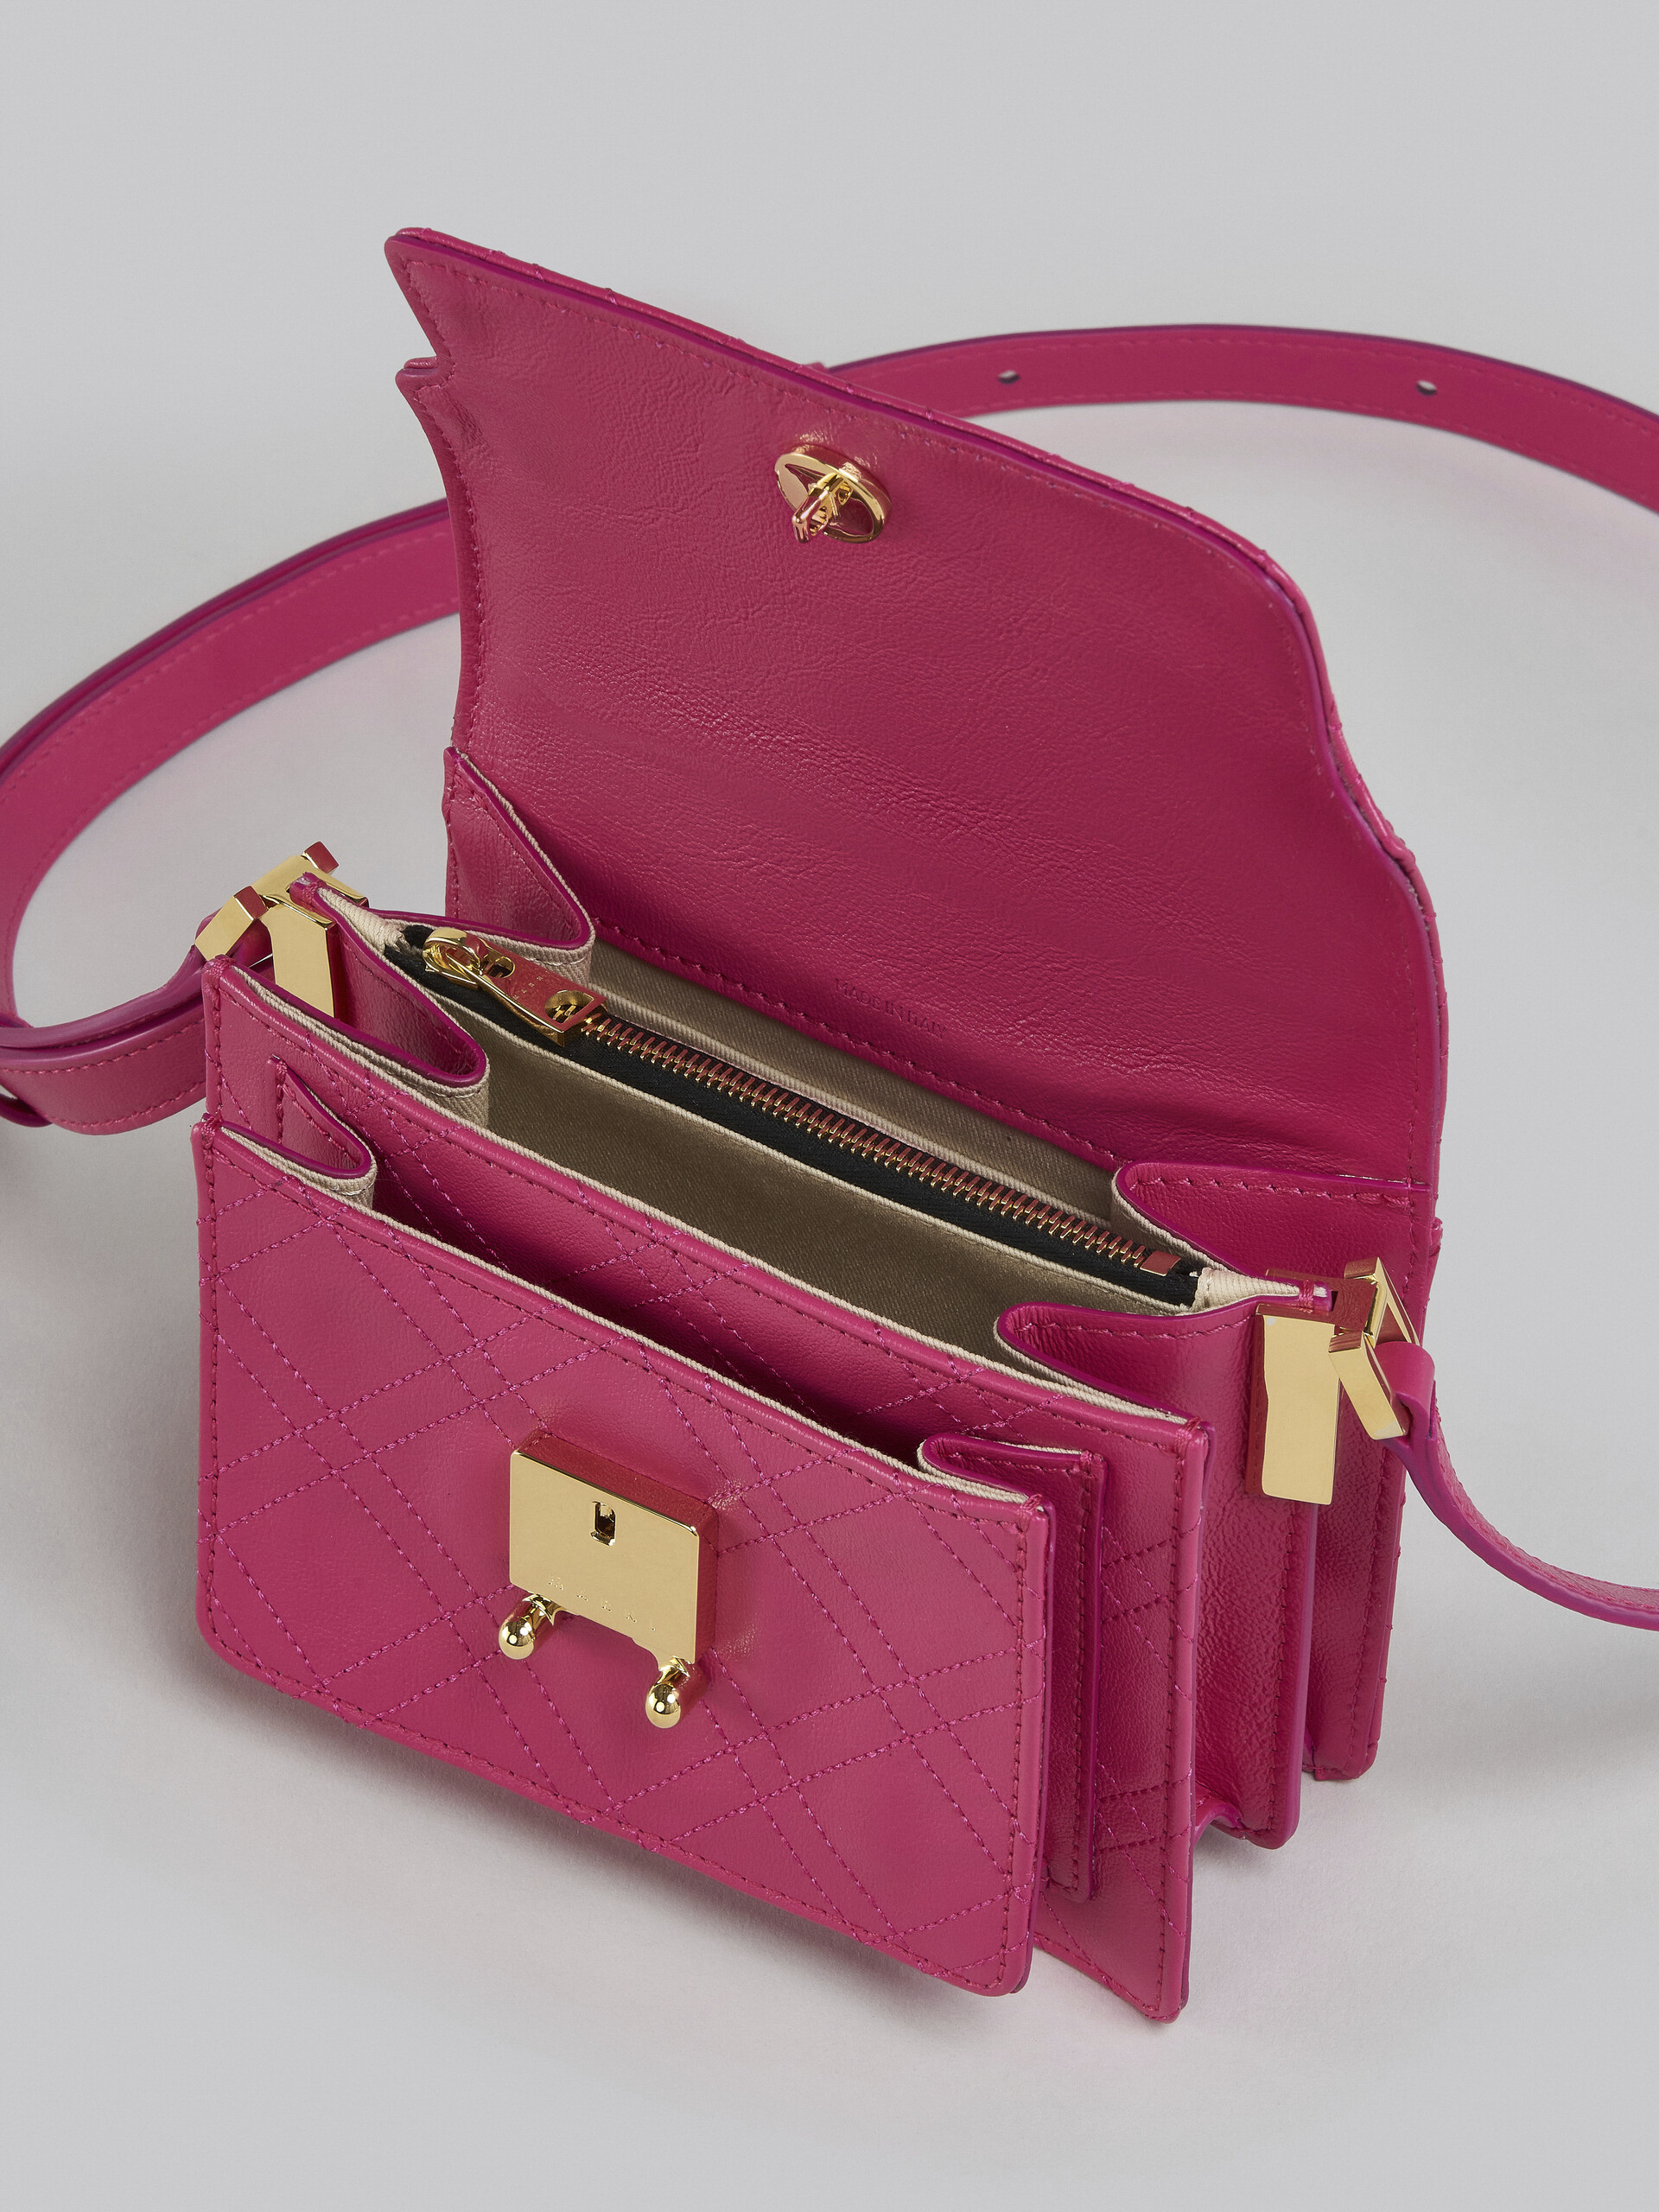 Trunk Soft Mini Bag in fuchsia leather - Shoulder Bag - Image 4